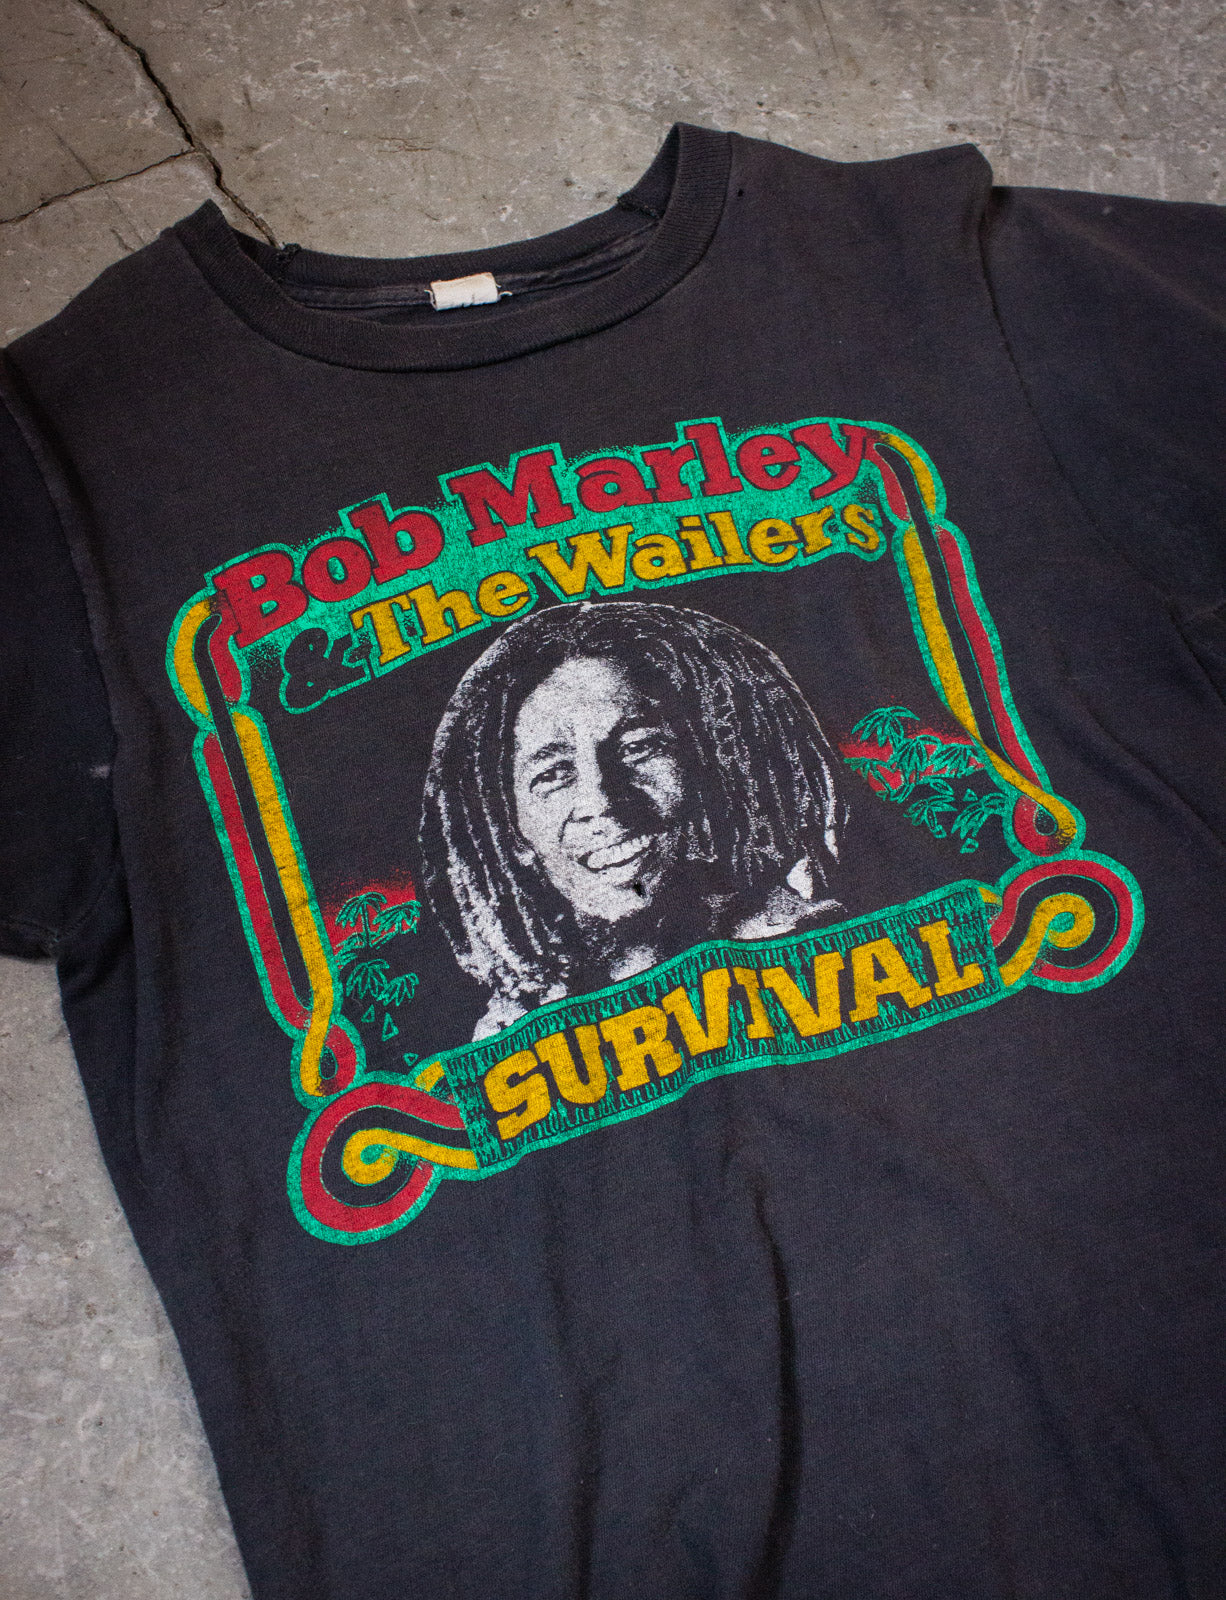 Vintage Bob Marley Survival Concert T Shirt 70s XS